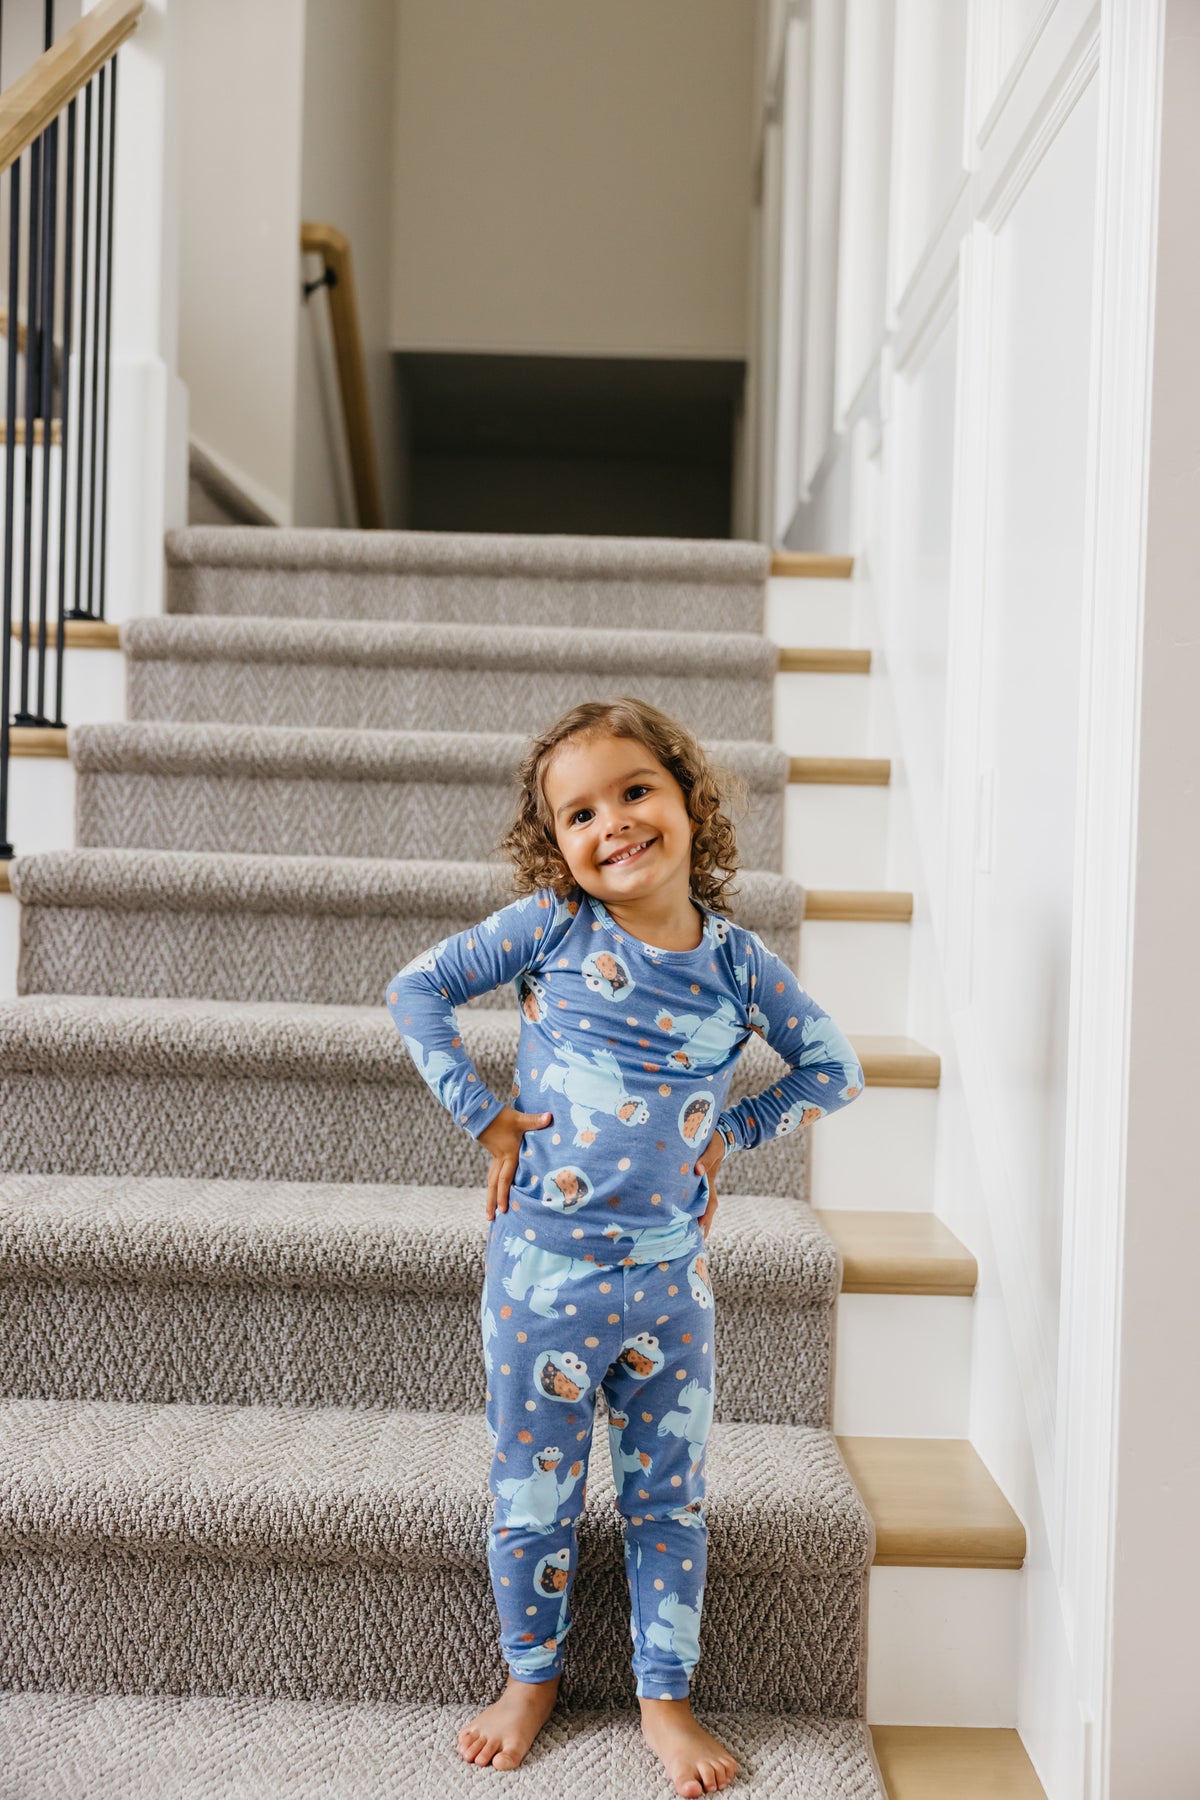 2pc Long Sleeve Pajama Set - Cookie Monster